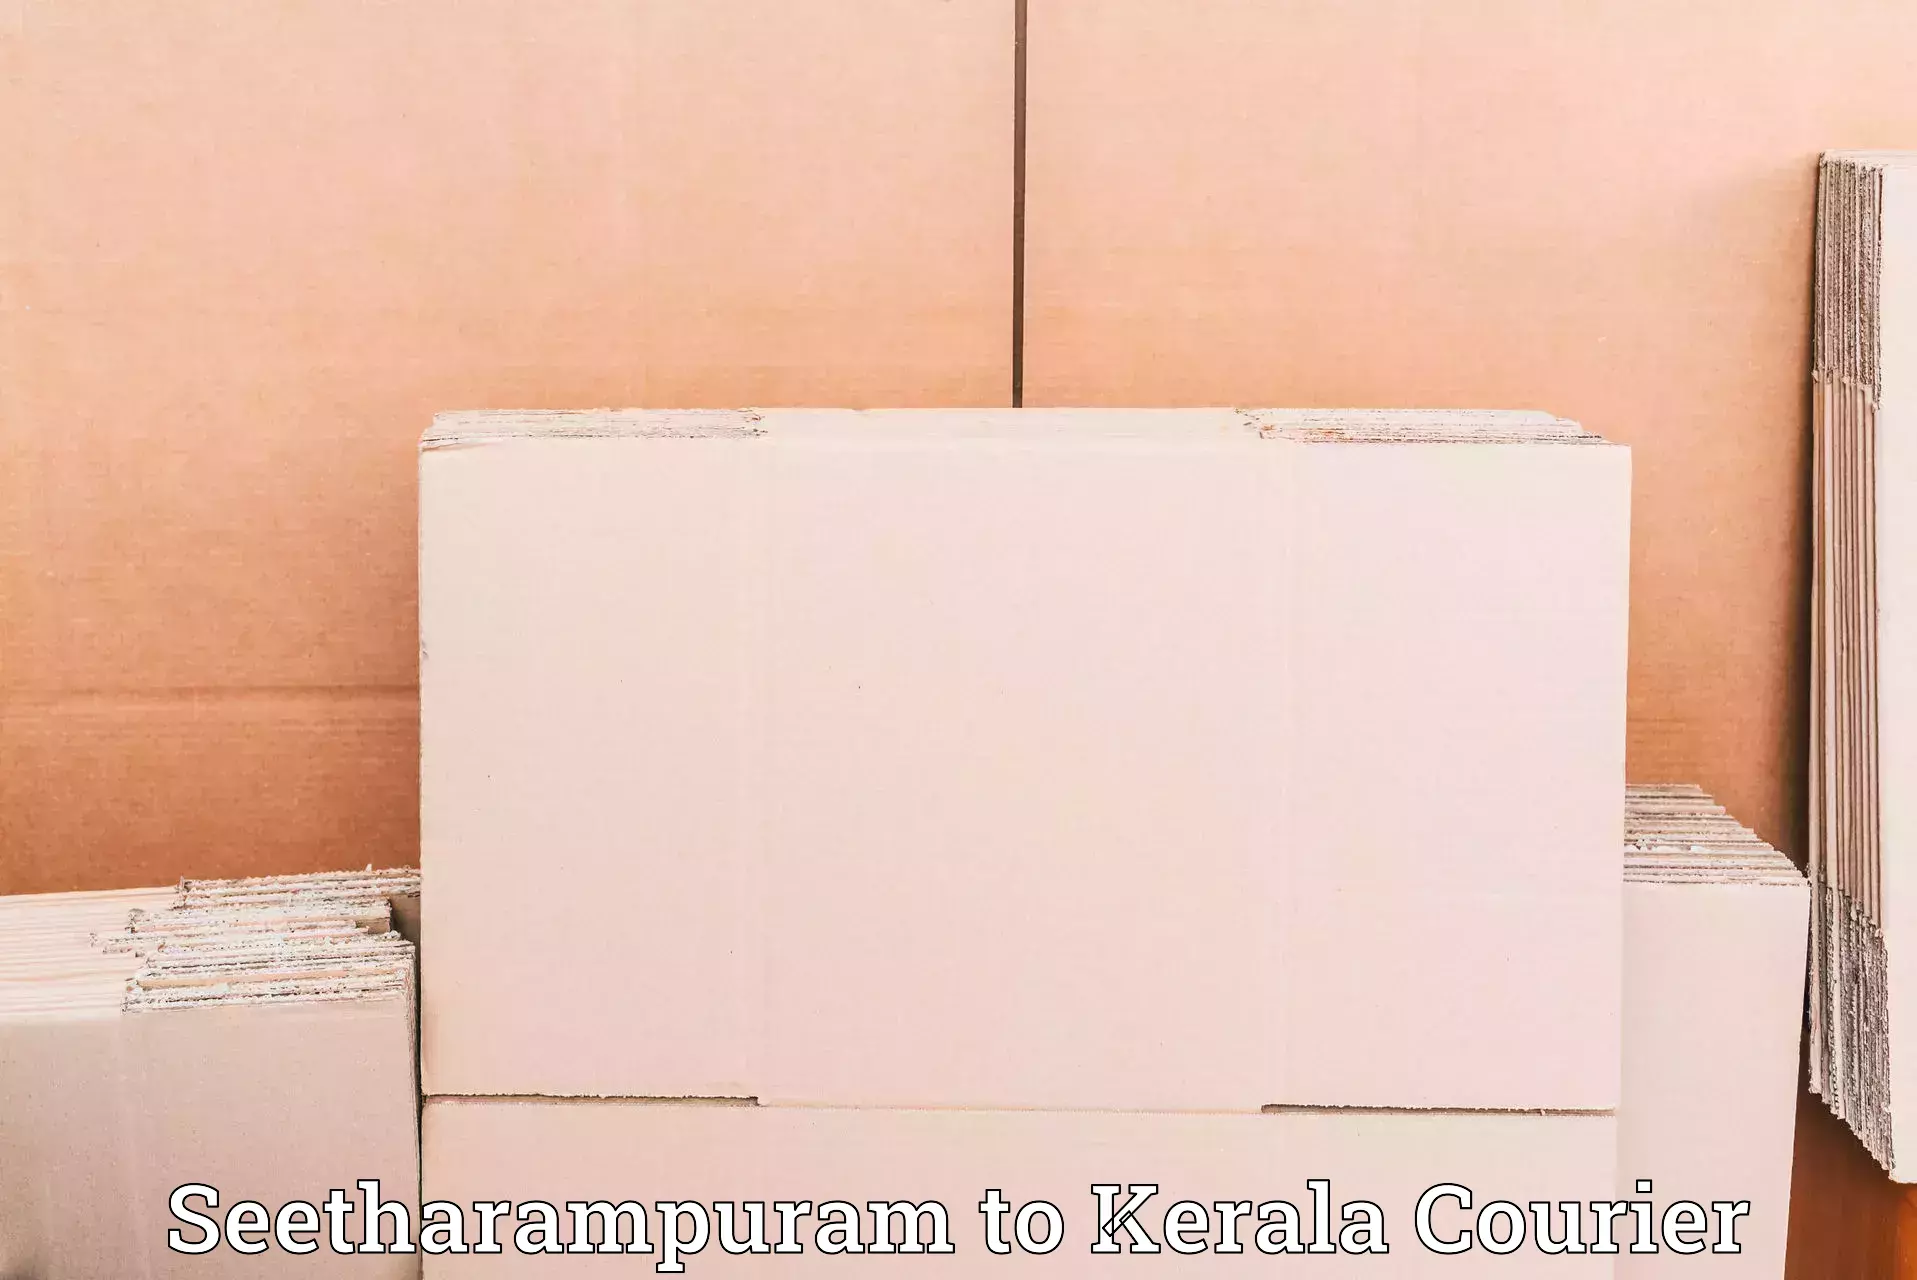 Efficient cargo handling Seetharampuram to Kerala